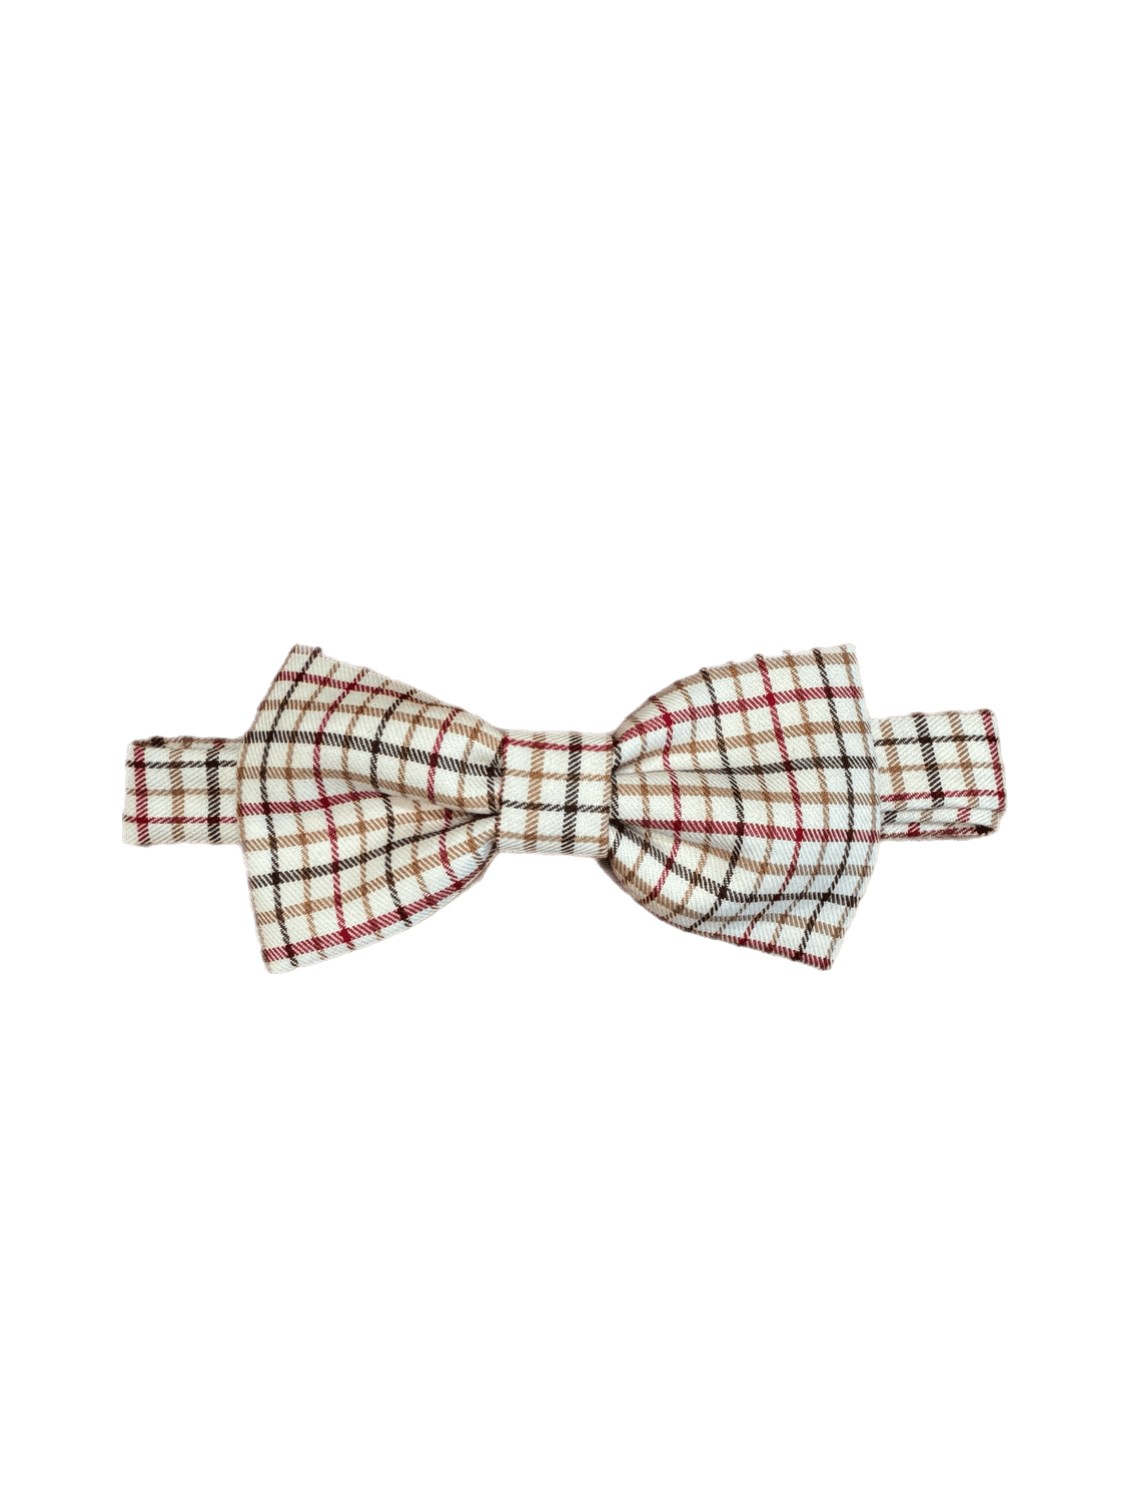 Bow Ties bow ties CHRISTINE ALCALAY Cream and Red Windowpane  